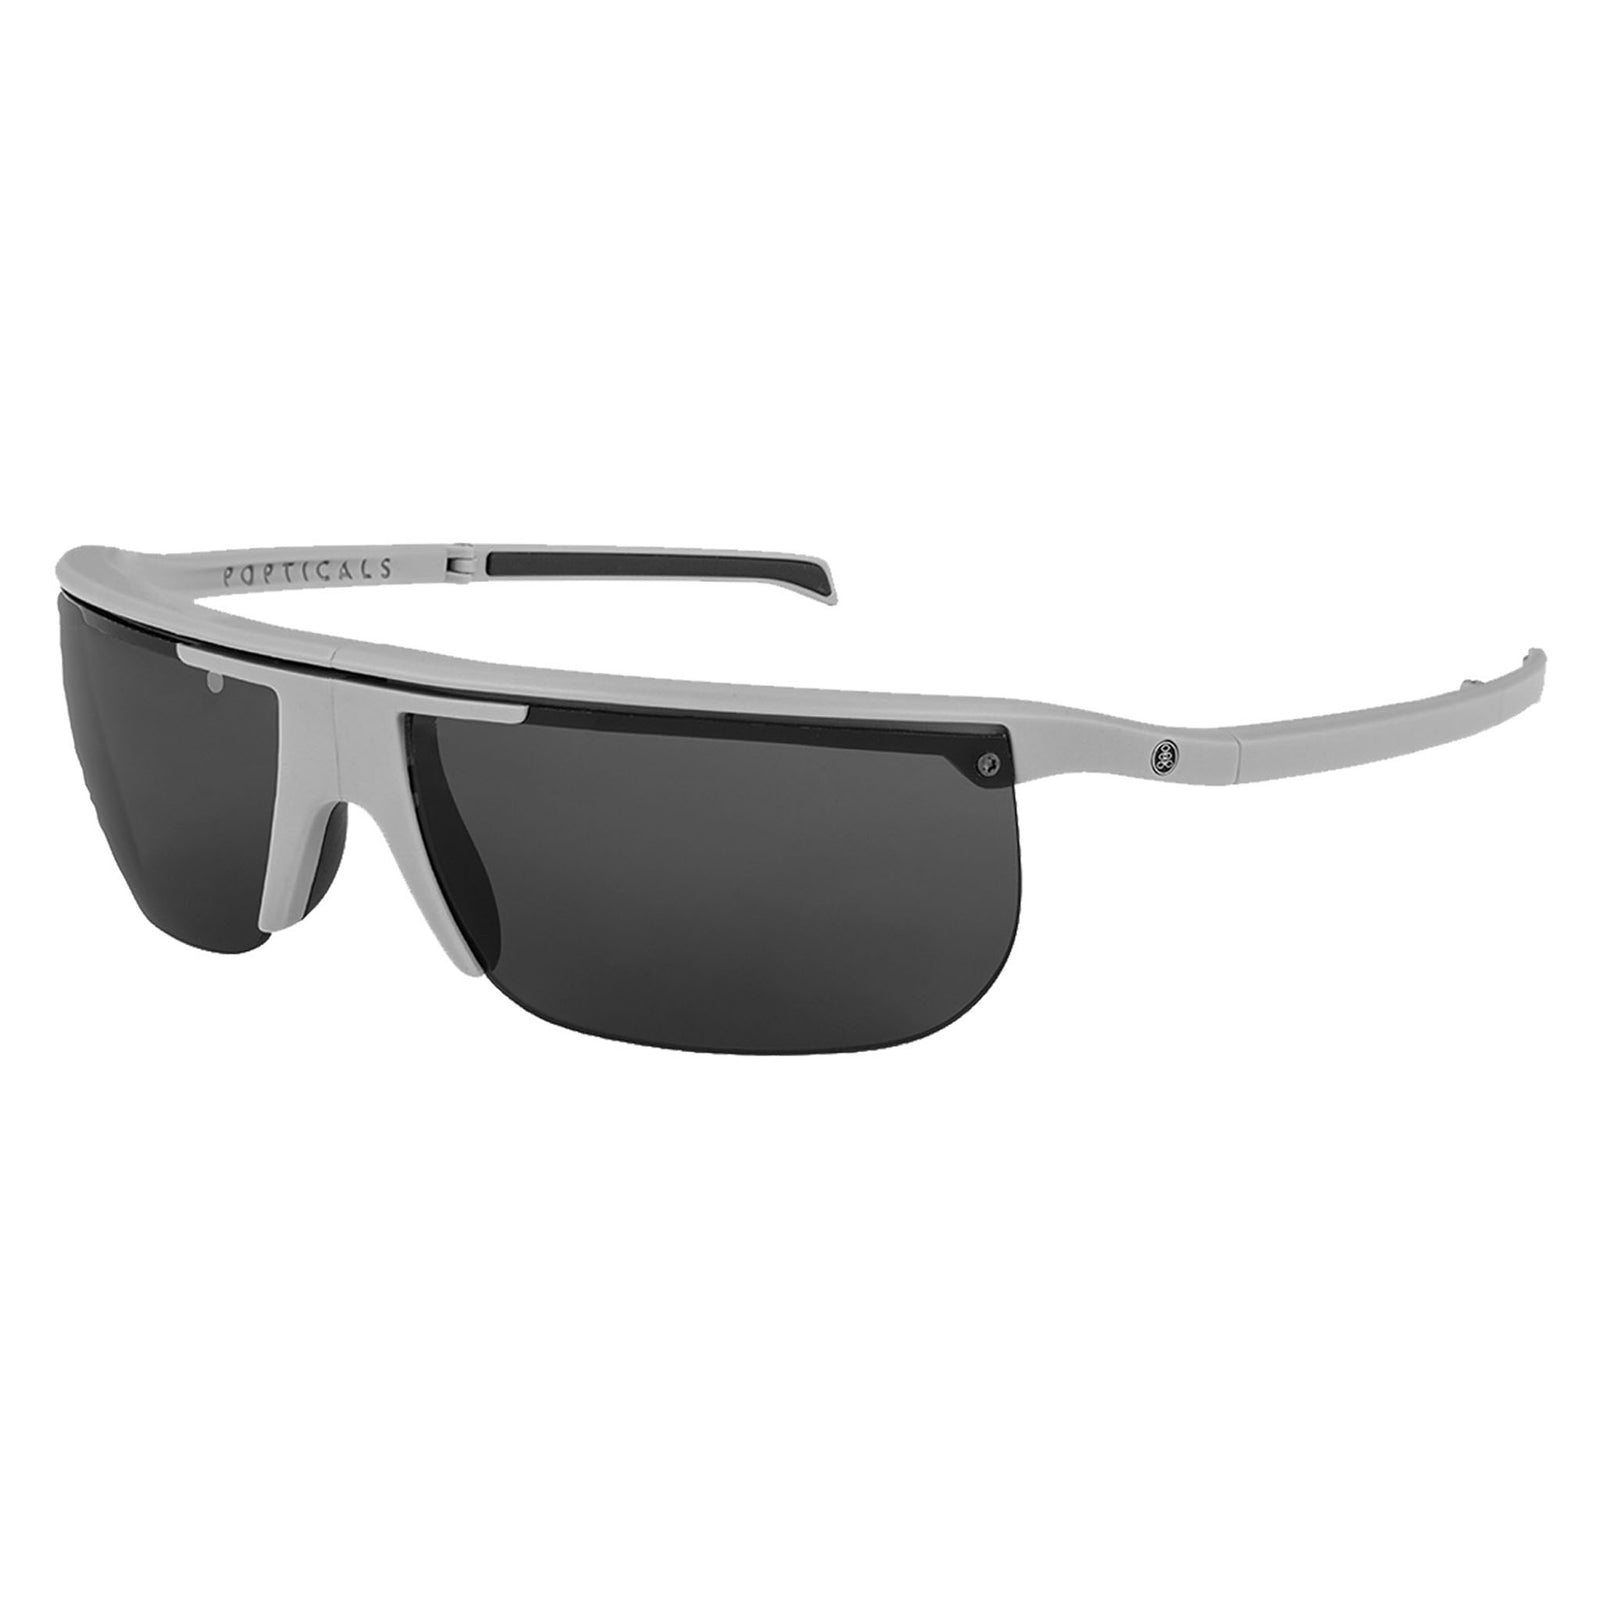 Popticals, Premium Compact Sunglasses, PopArt, 010030-GMGP, Polarized Sunglasses, Matte Gray Frame, Gray Lenses, Glam View